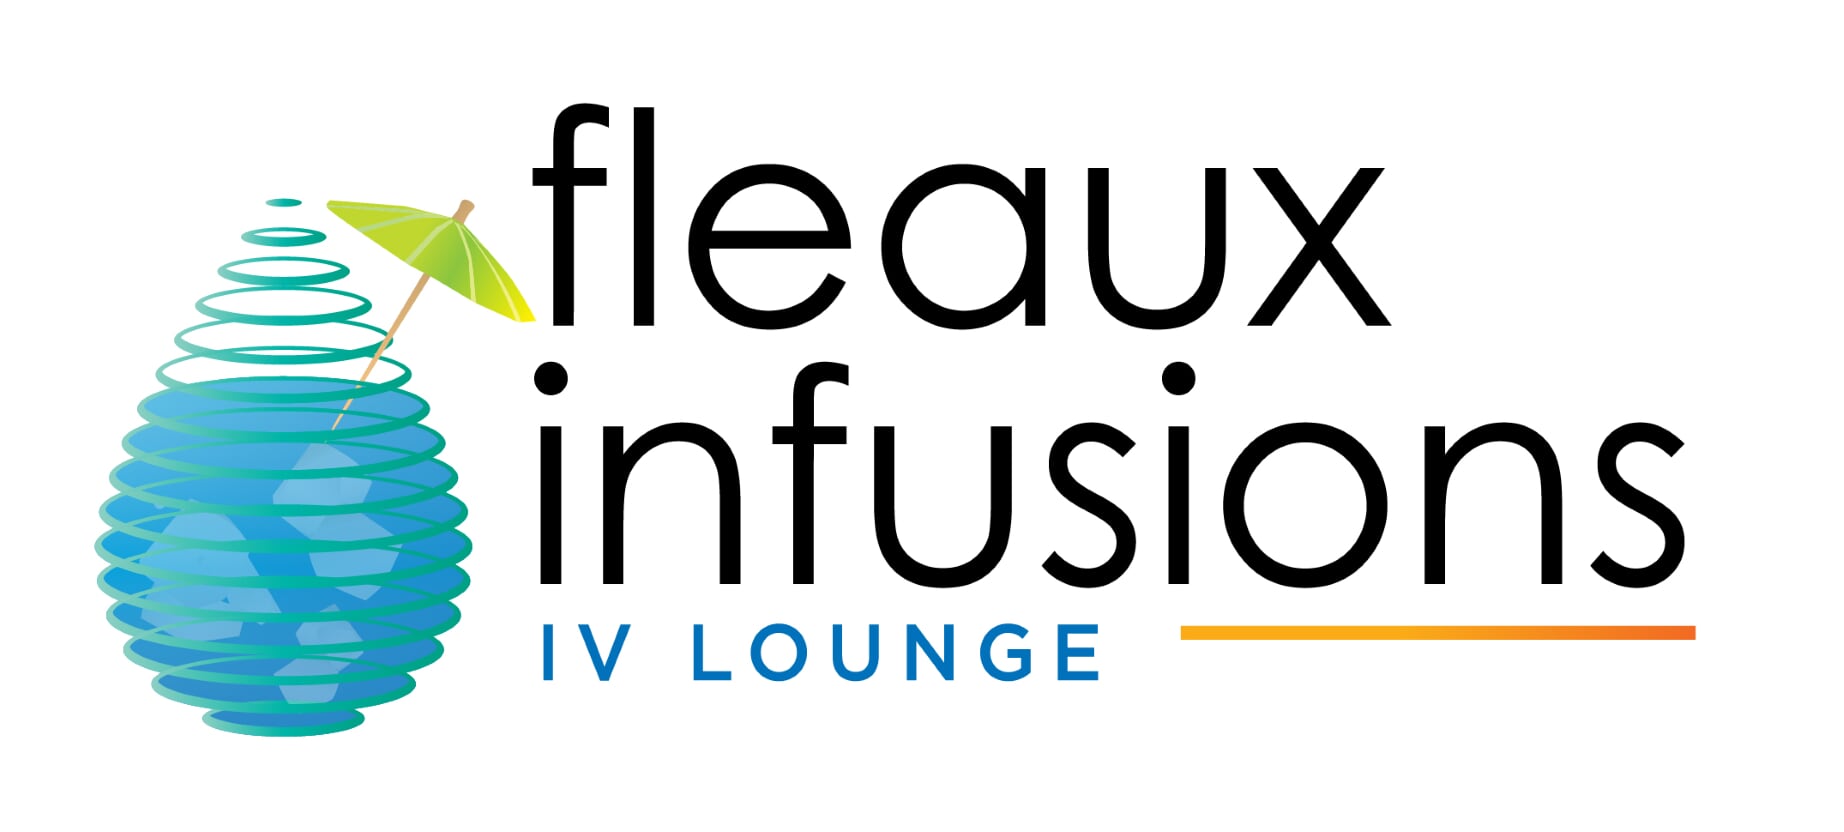 Fleaux Infusions IV Lounge